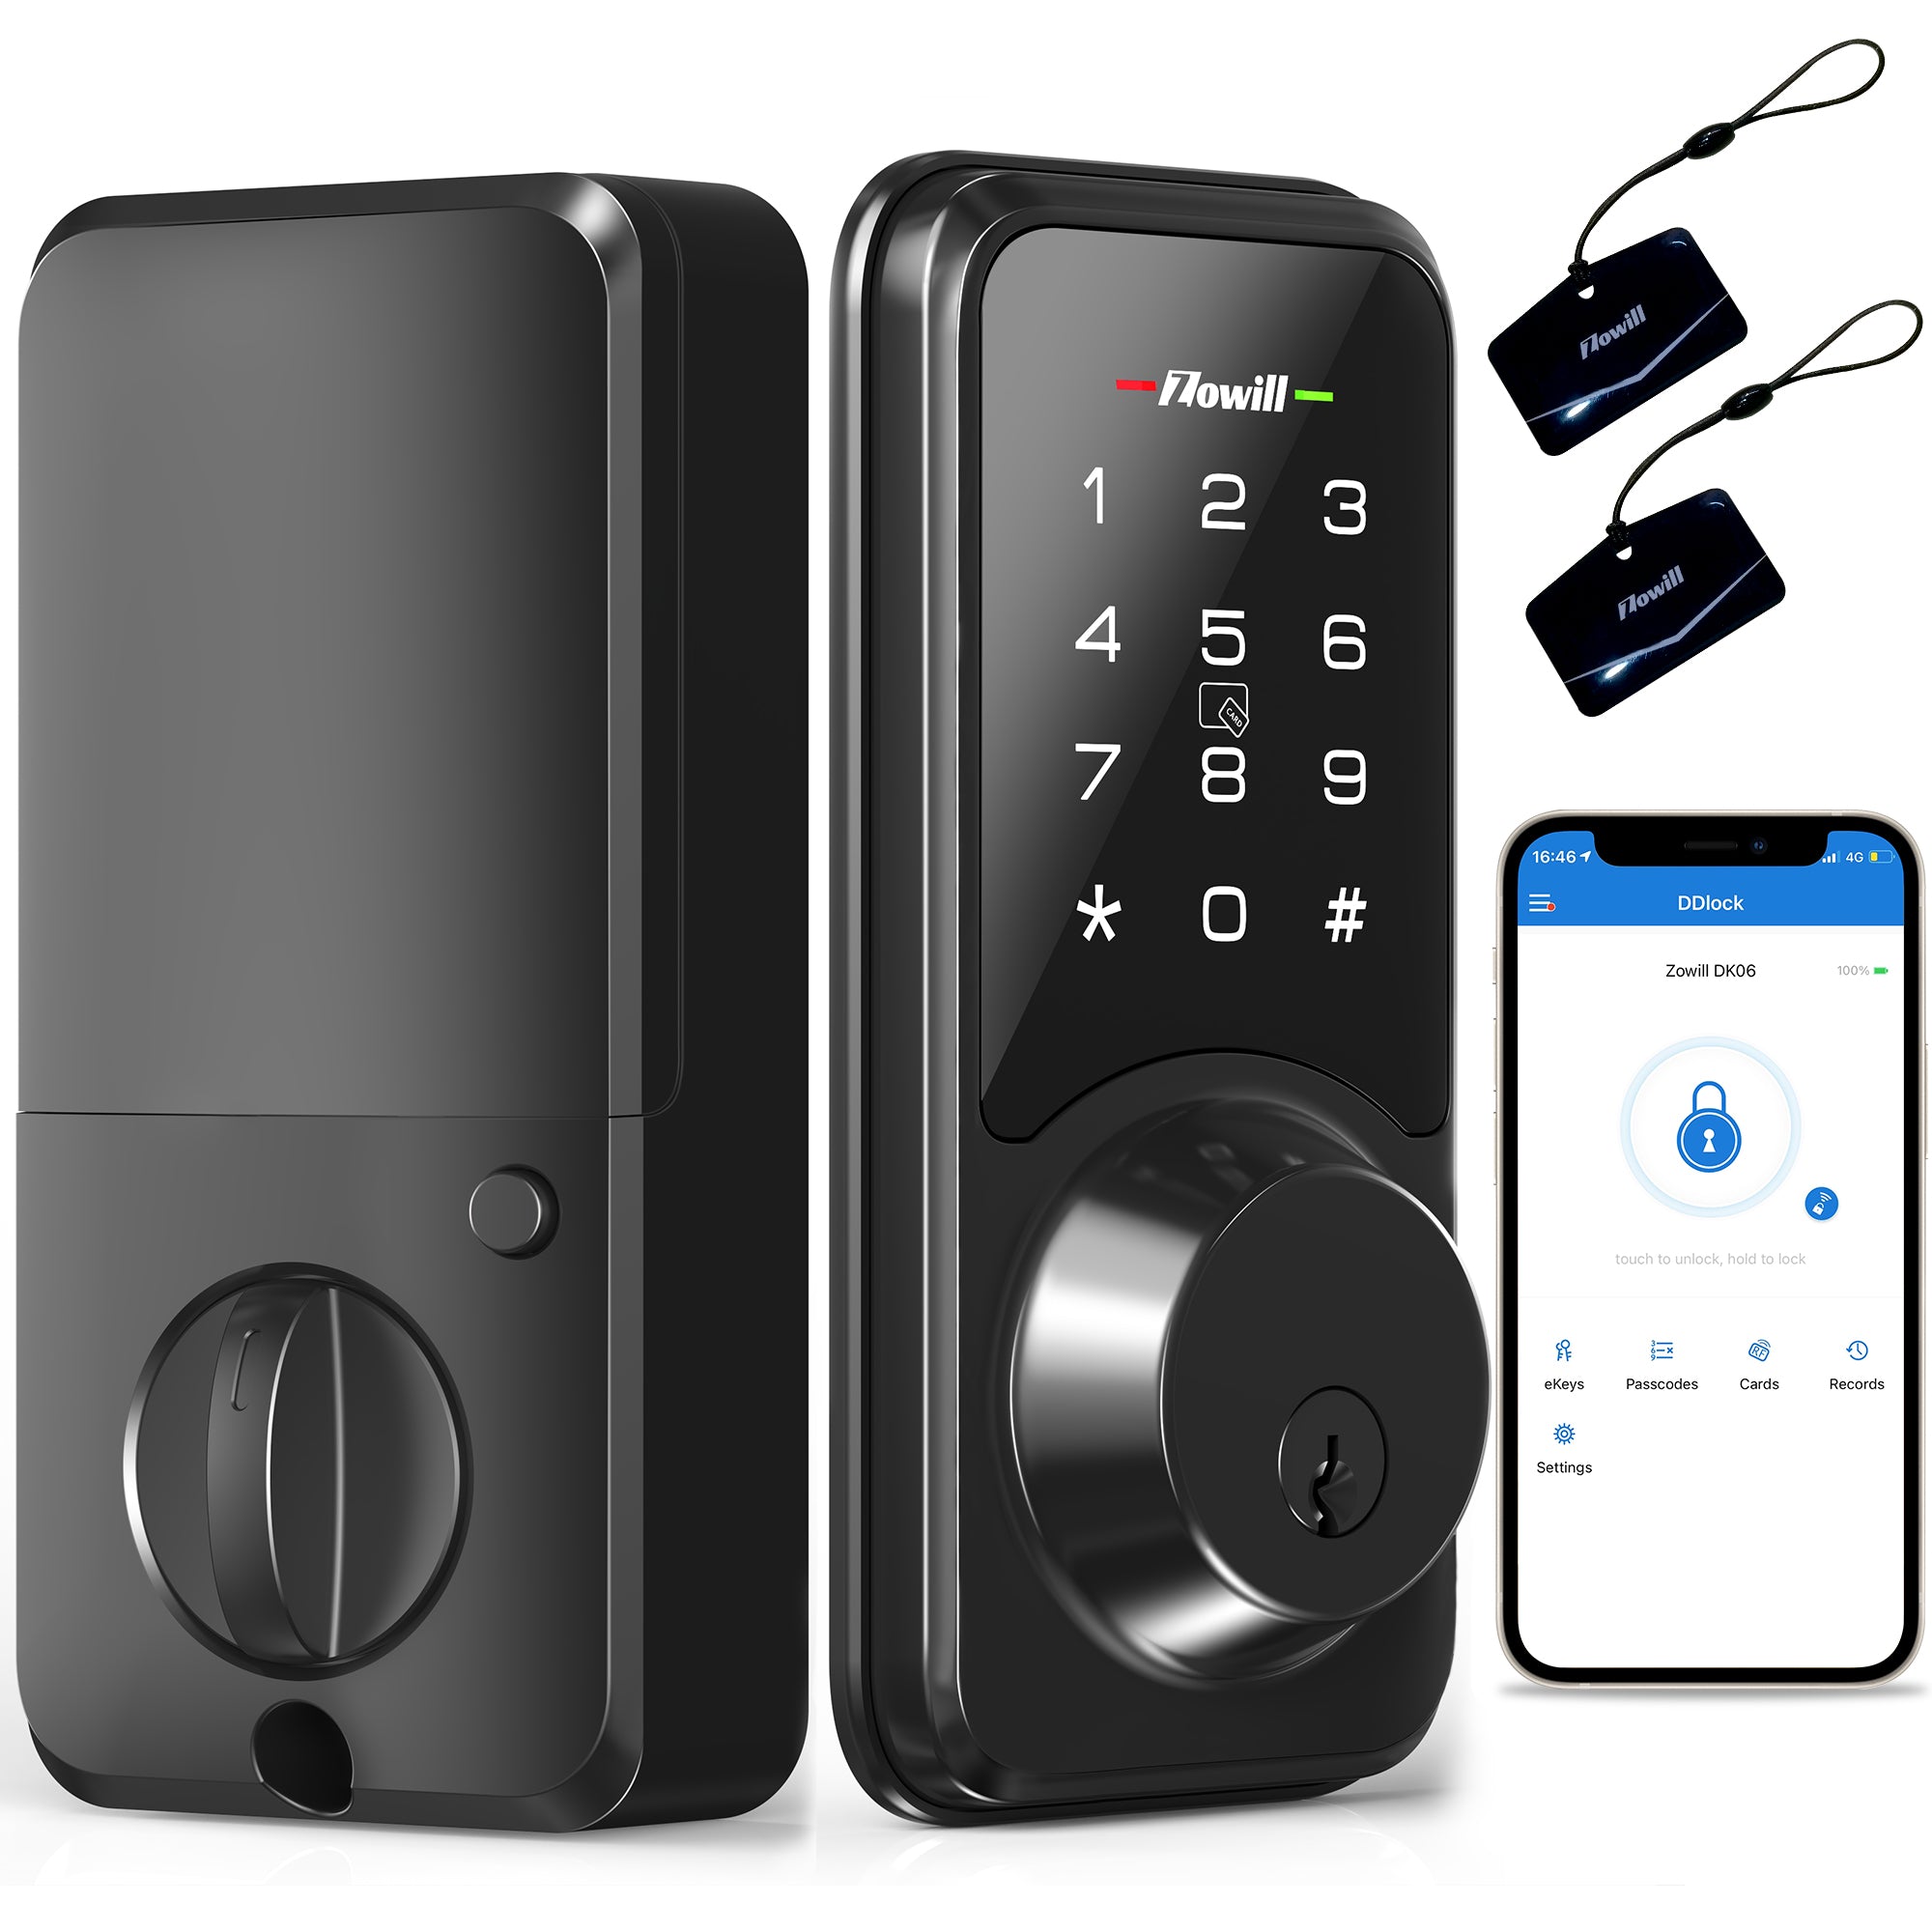 Keyless Entry Door Lock with Bluetooth App DK06 – zowill